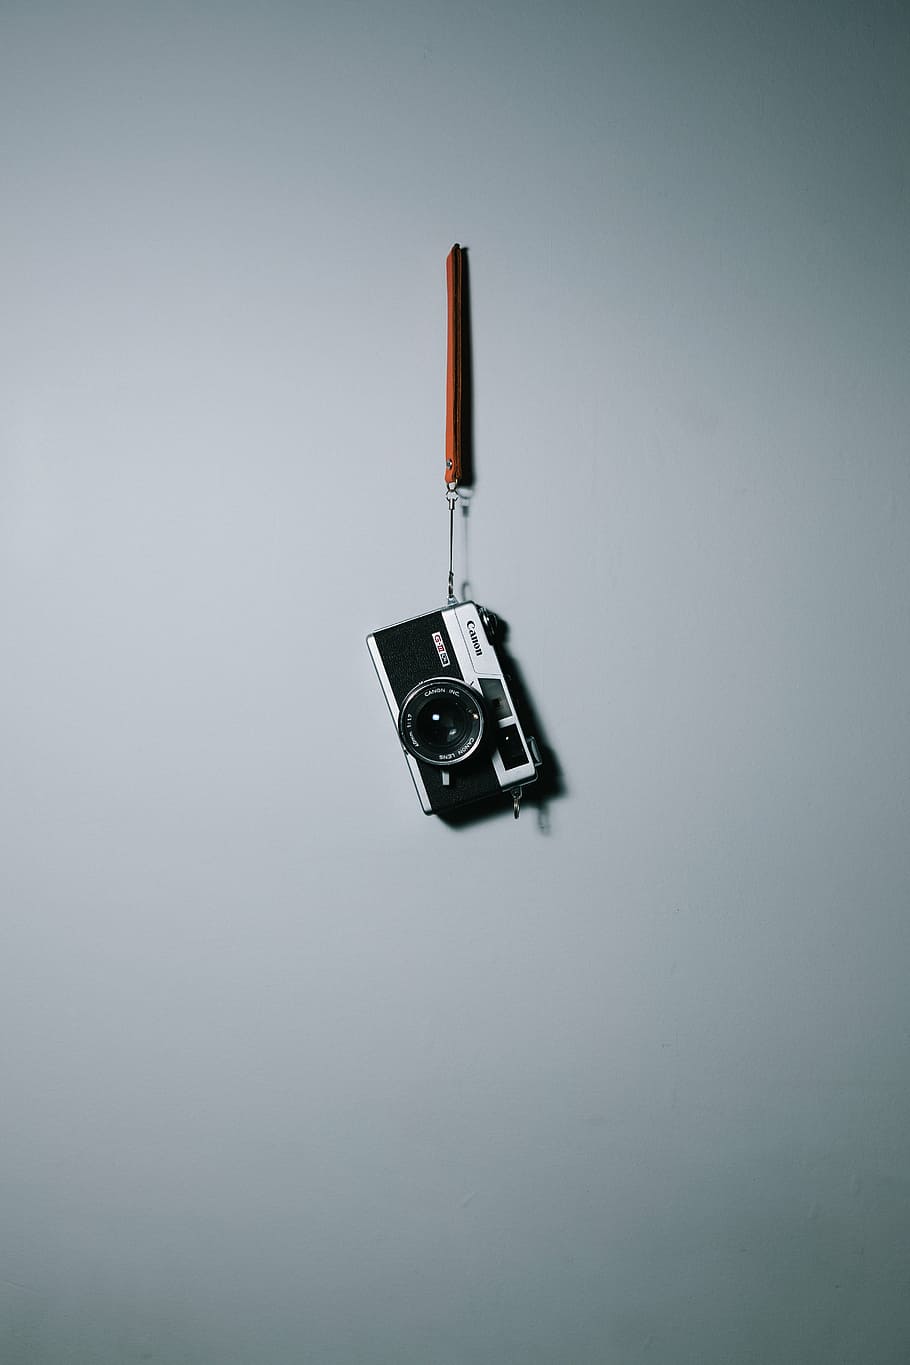 black, grey, slr camera, hanging, wall, camera, white, surface, canon, lens